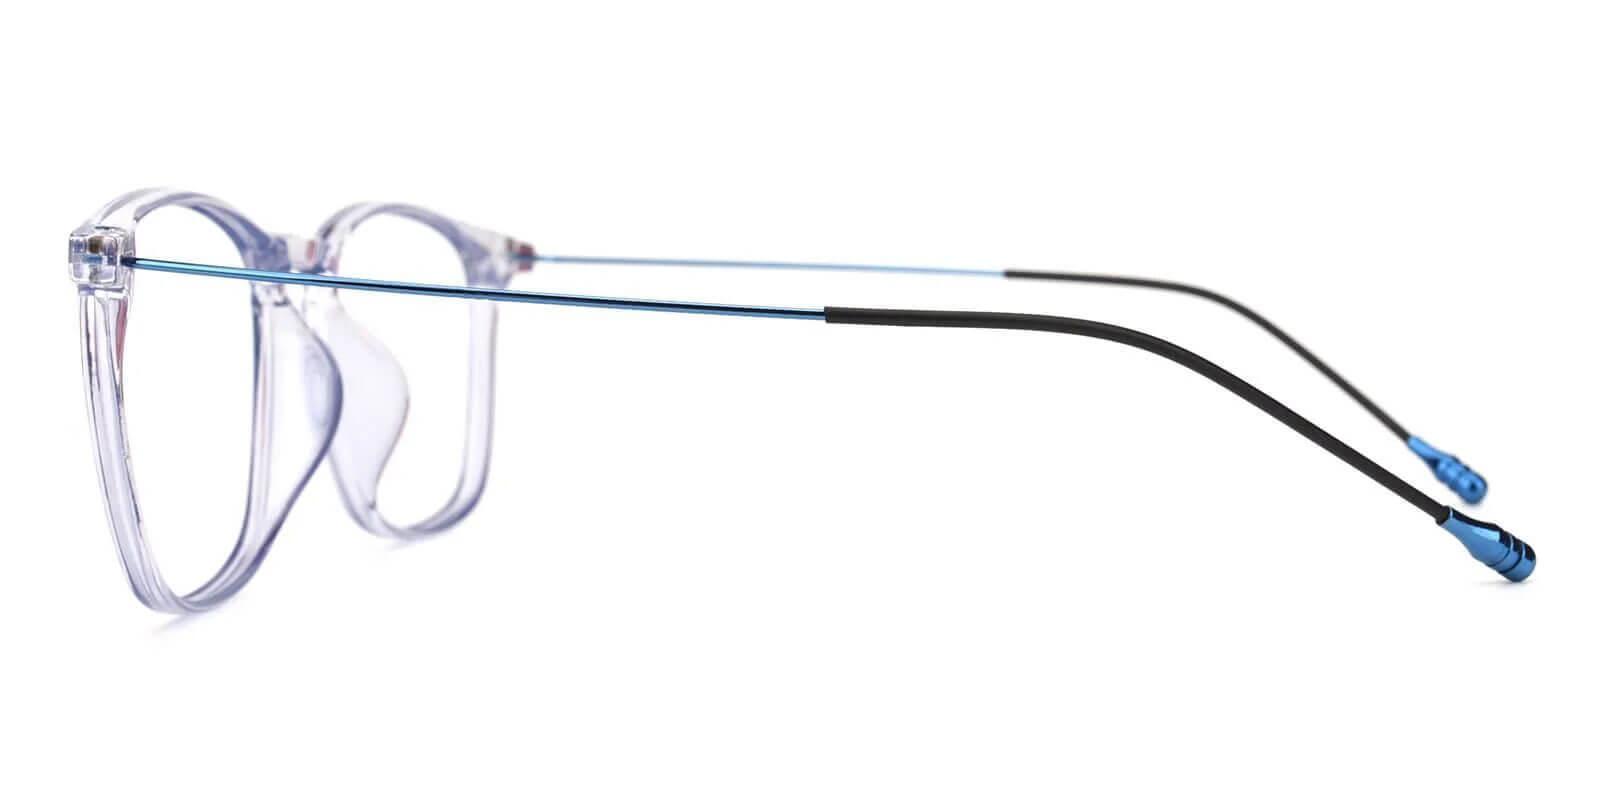 Clinton Blue TR Eyeglasses , UniversalBridgeFit , Lightweight Frames from ABBE Glasses